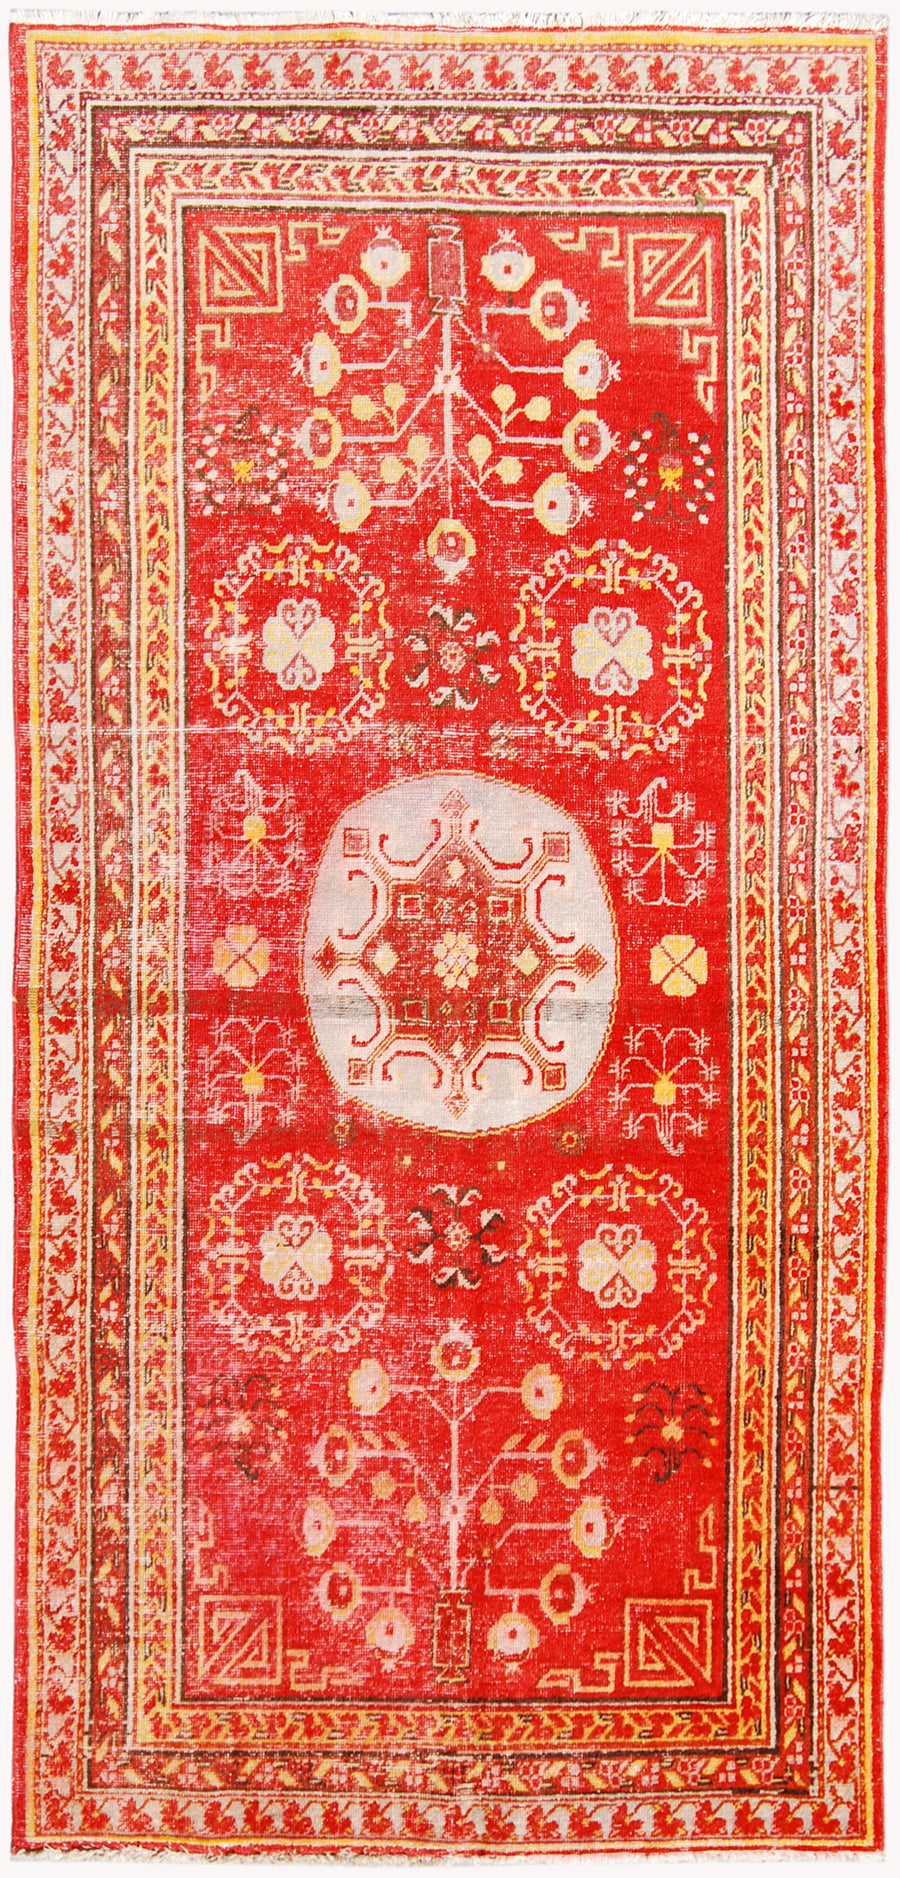 9'x4' Antique Samarkand Rug